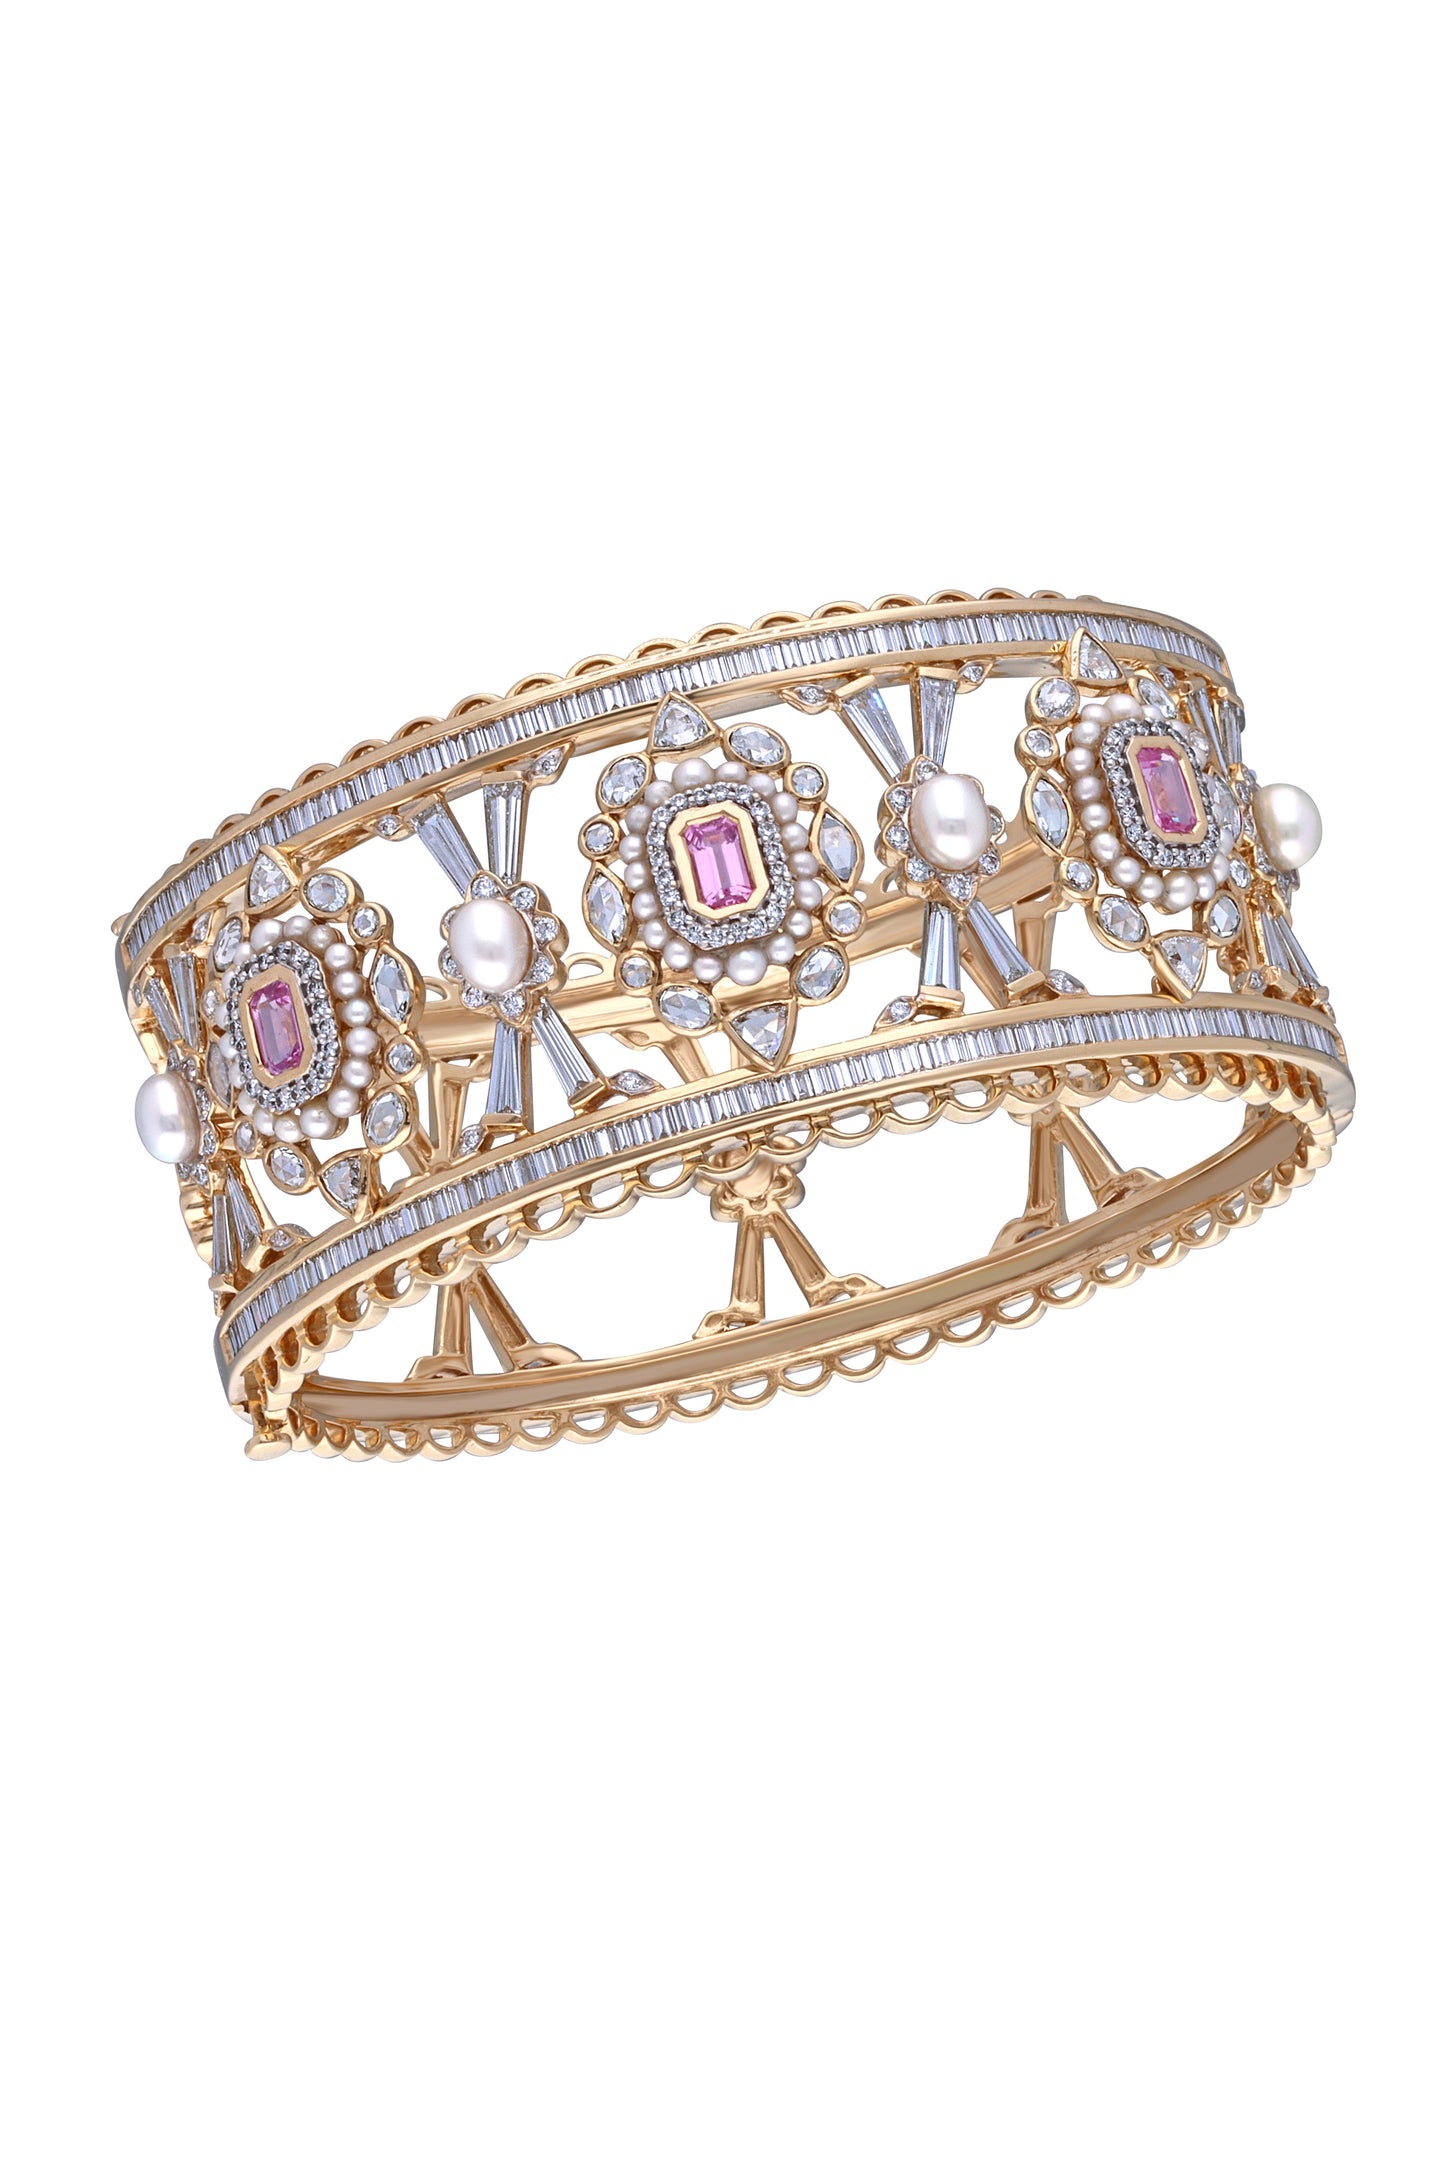 MOKSH-Paro Pink Sapphire Cuff Bracelet-YLWGLD